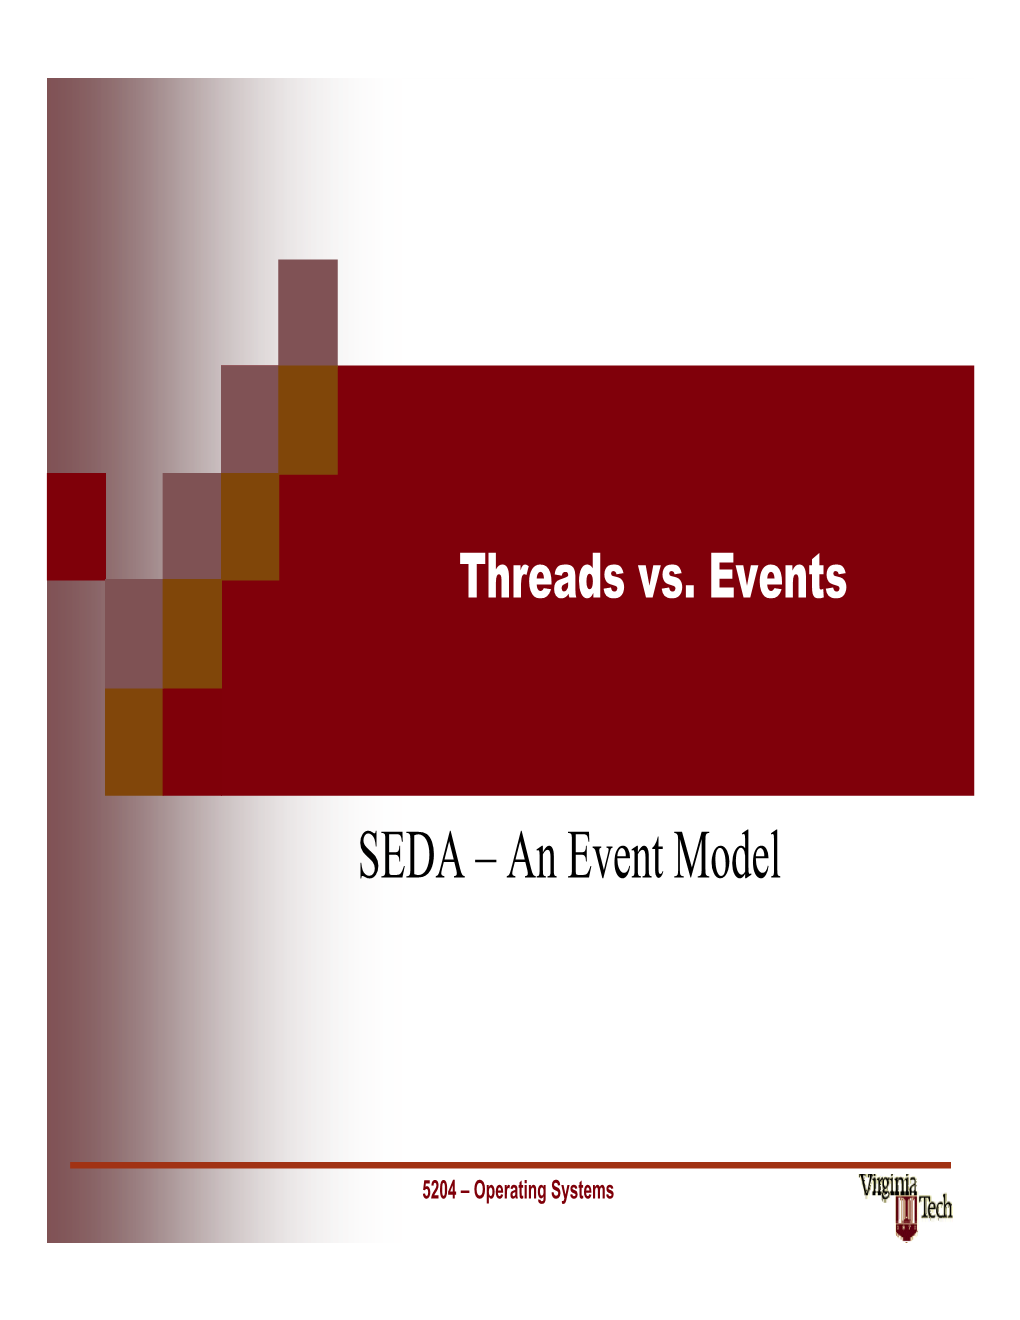 SEDA – an Event Model